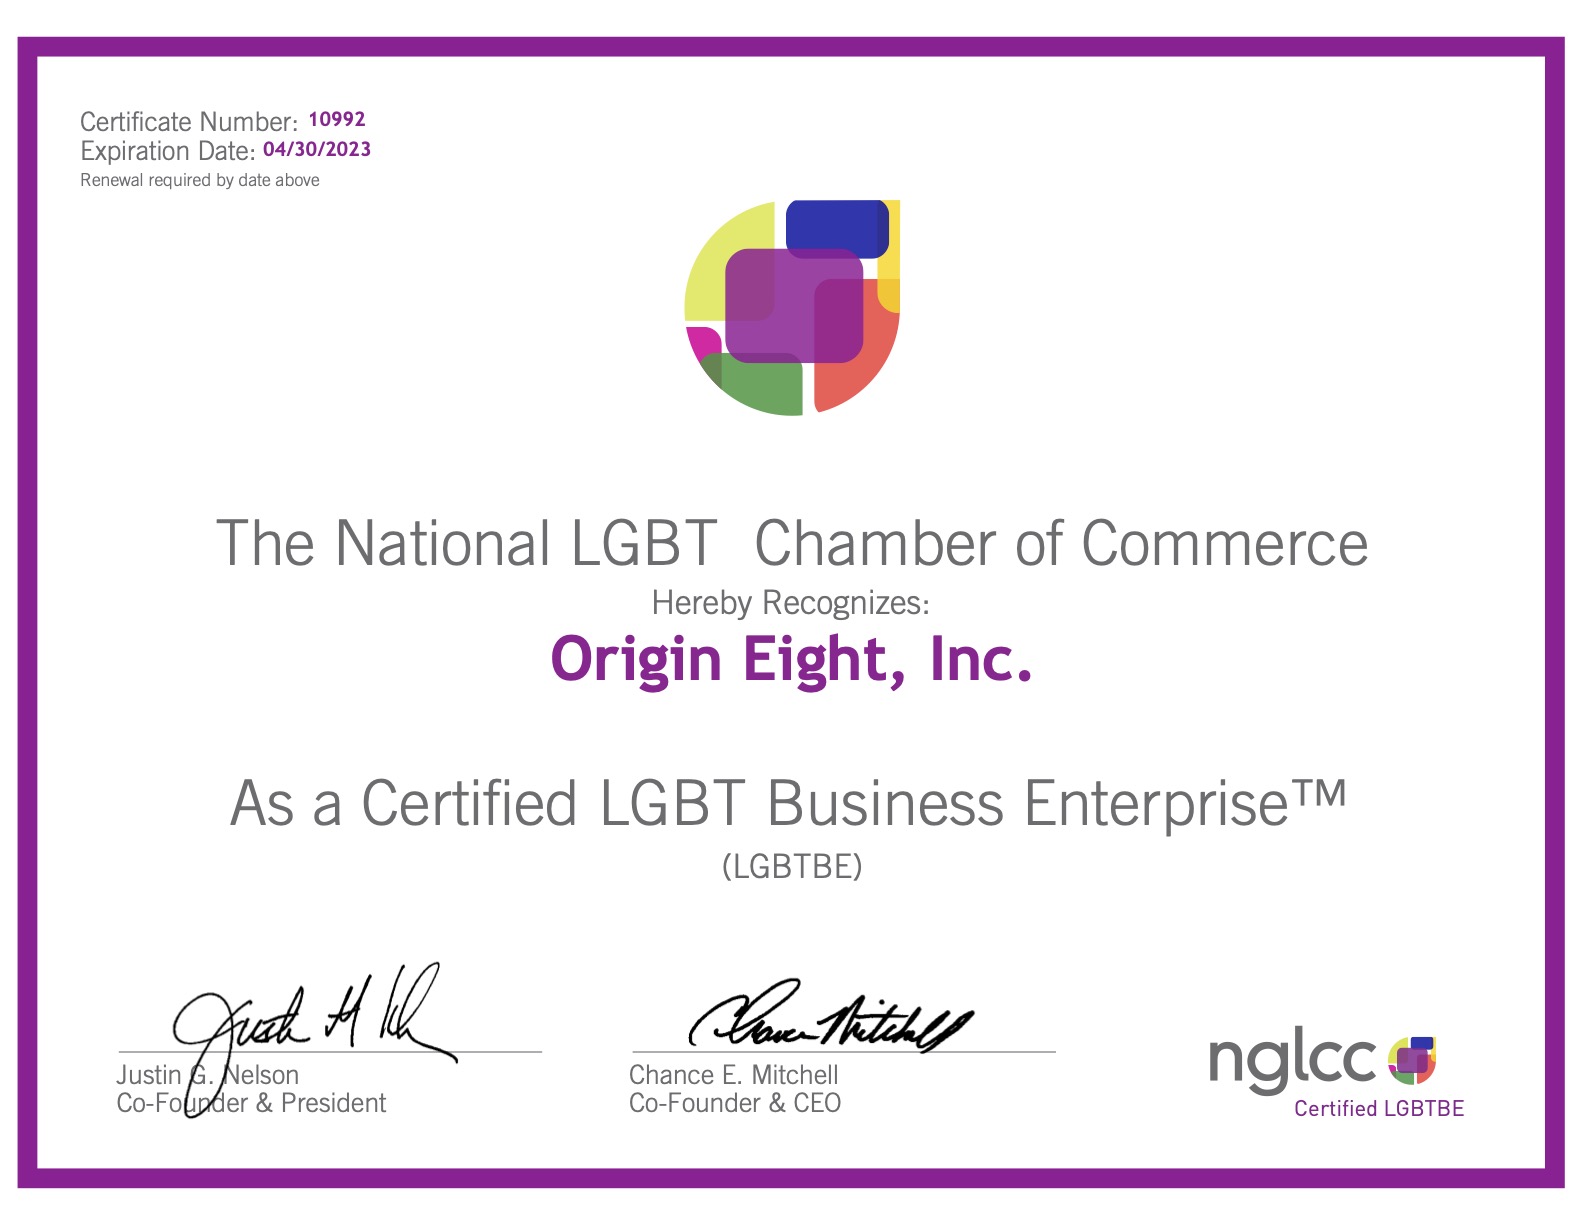 NGLCC LGBT Certified Business Enterprise